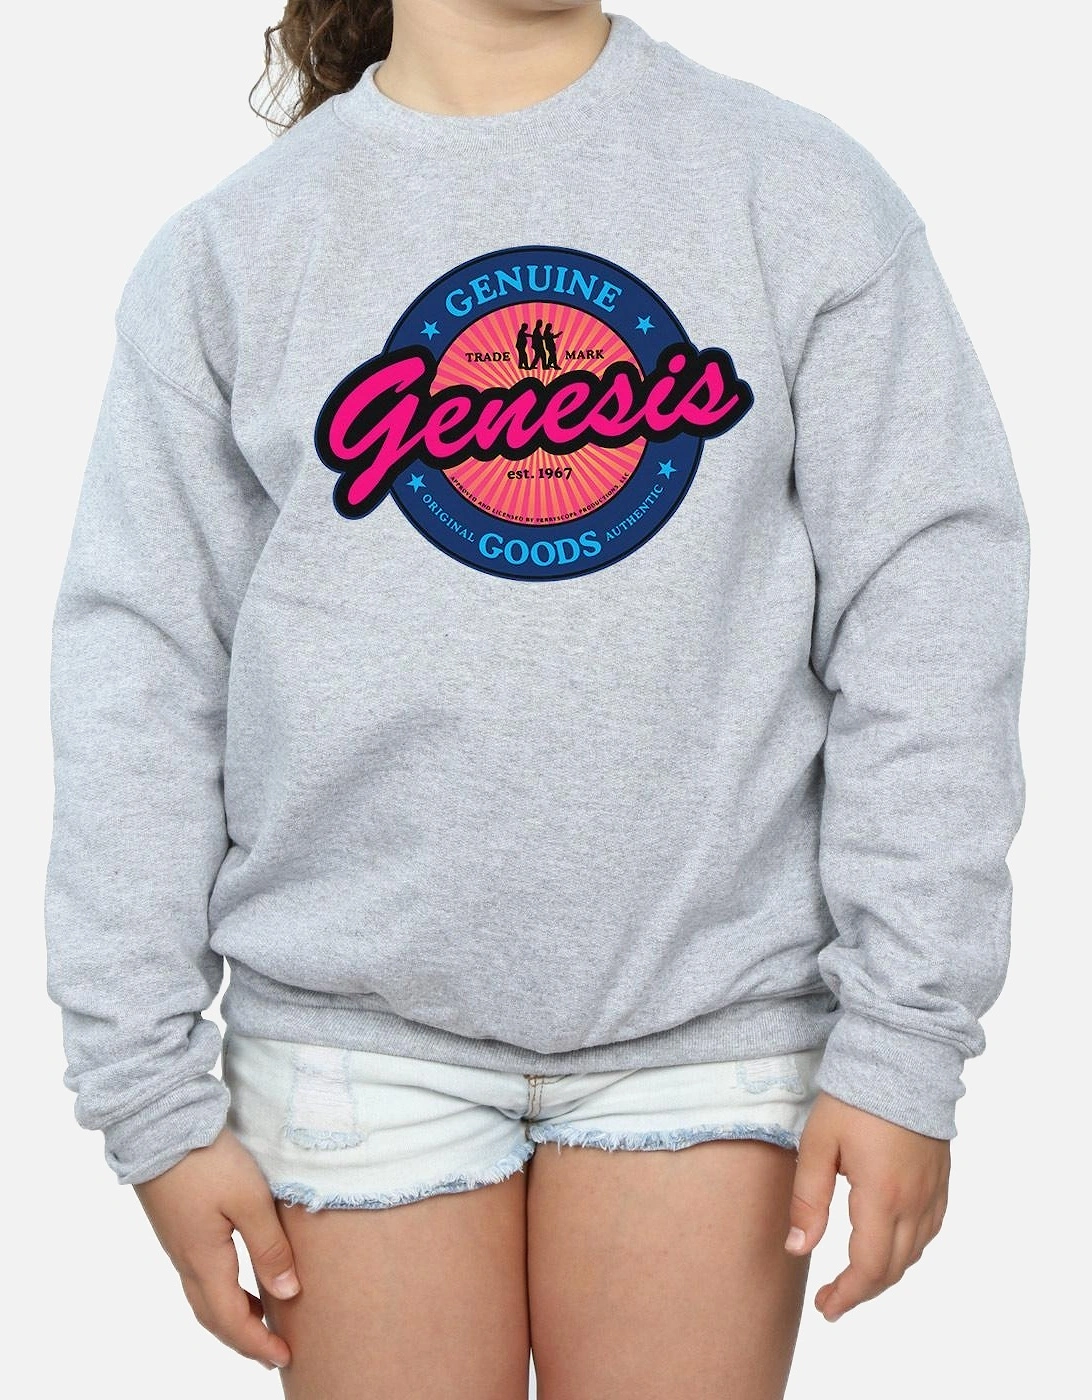 Girls Neon Logo Sweatshirt